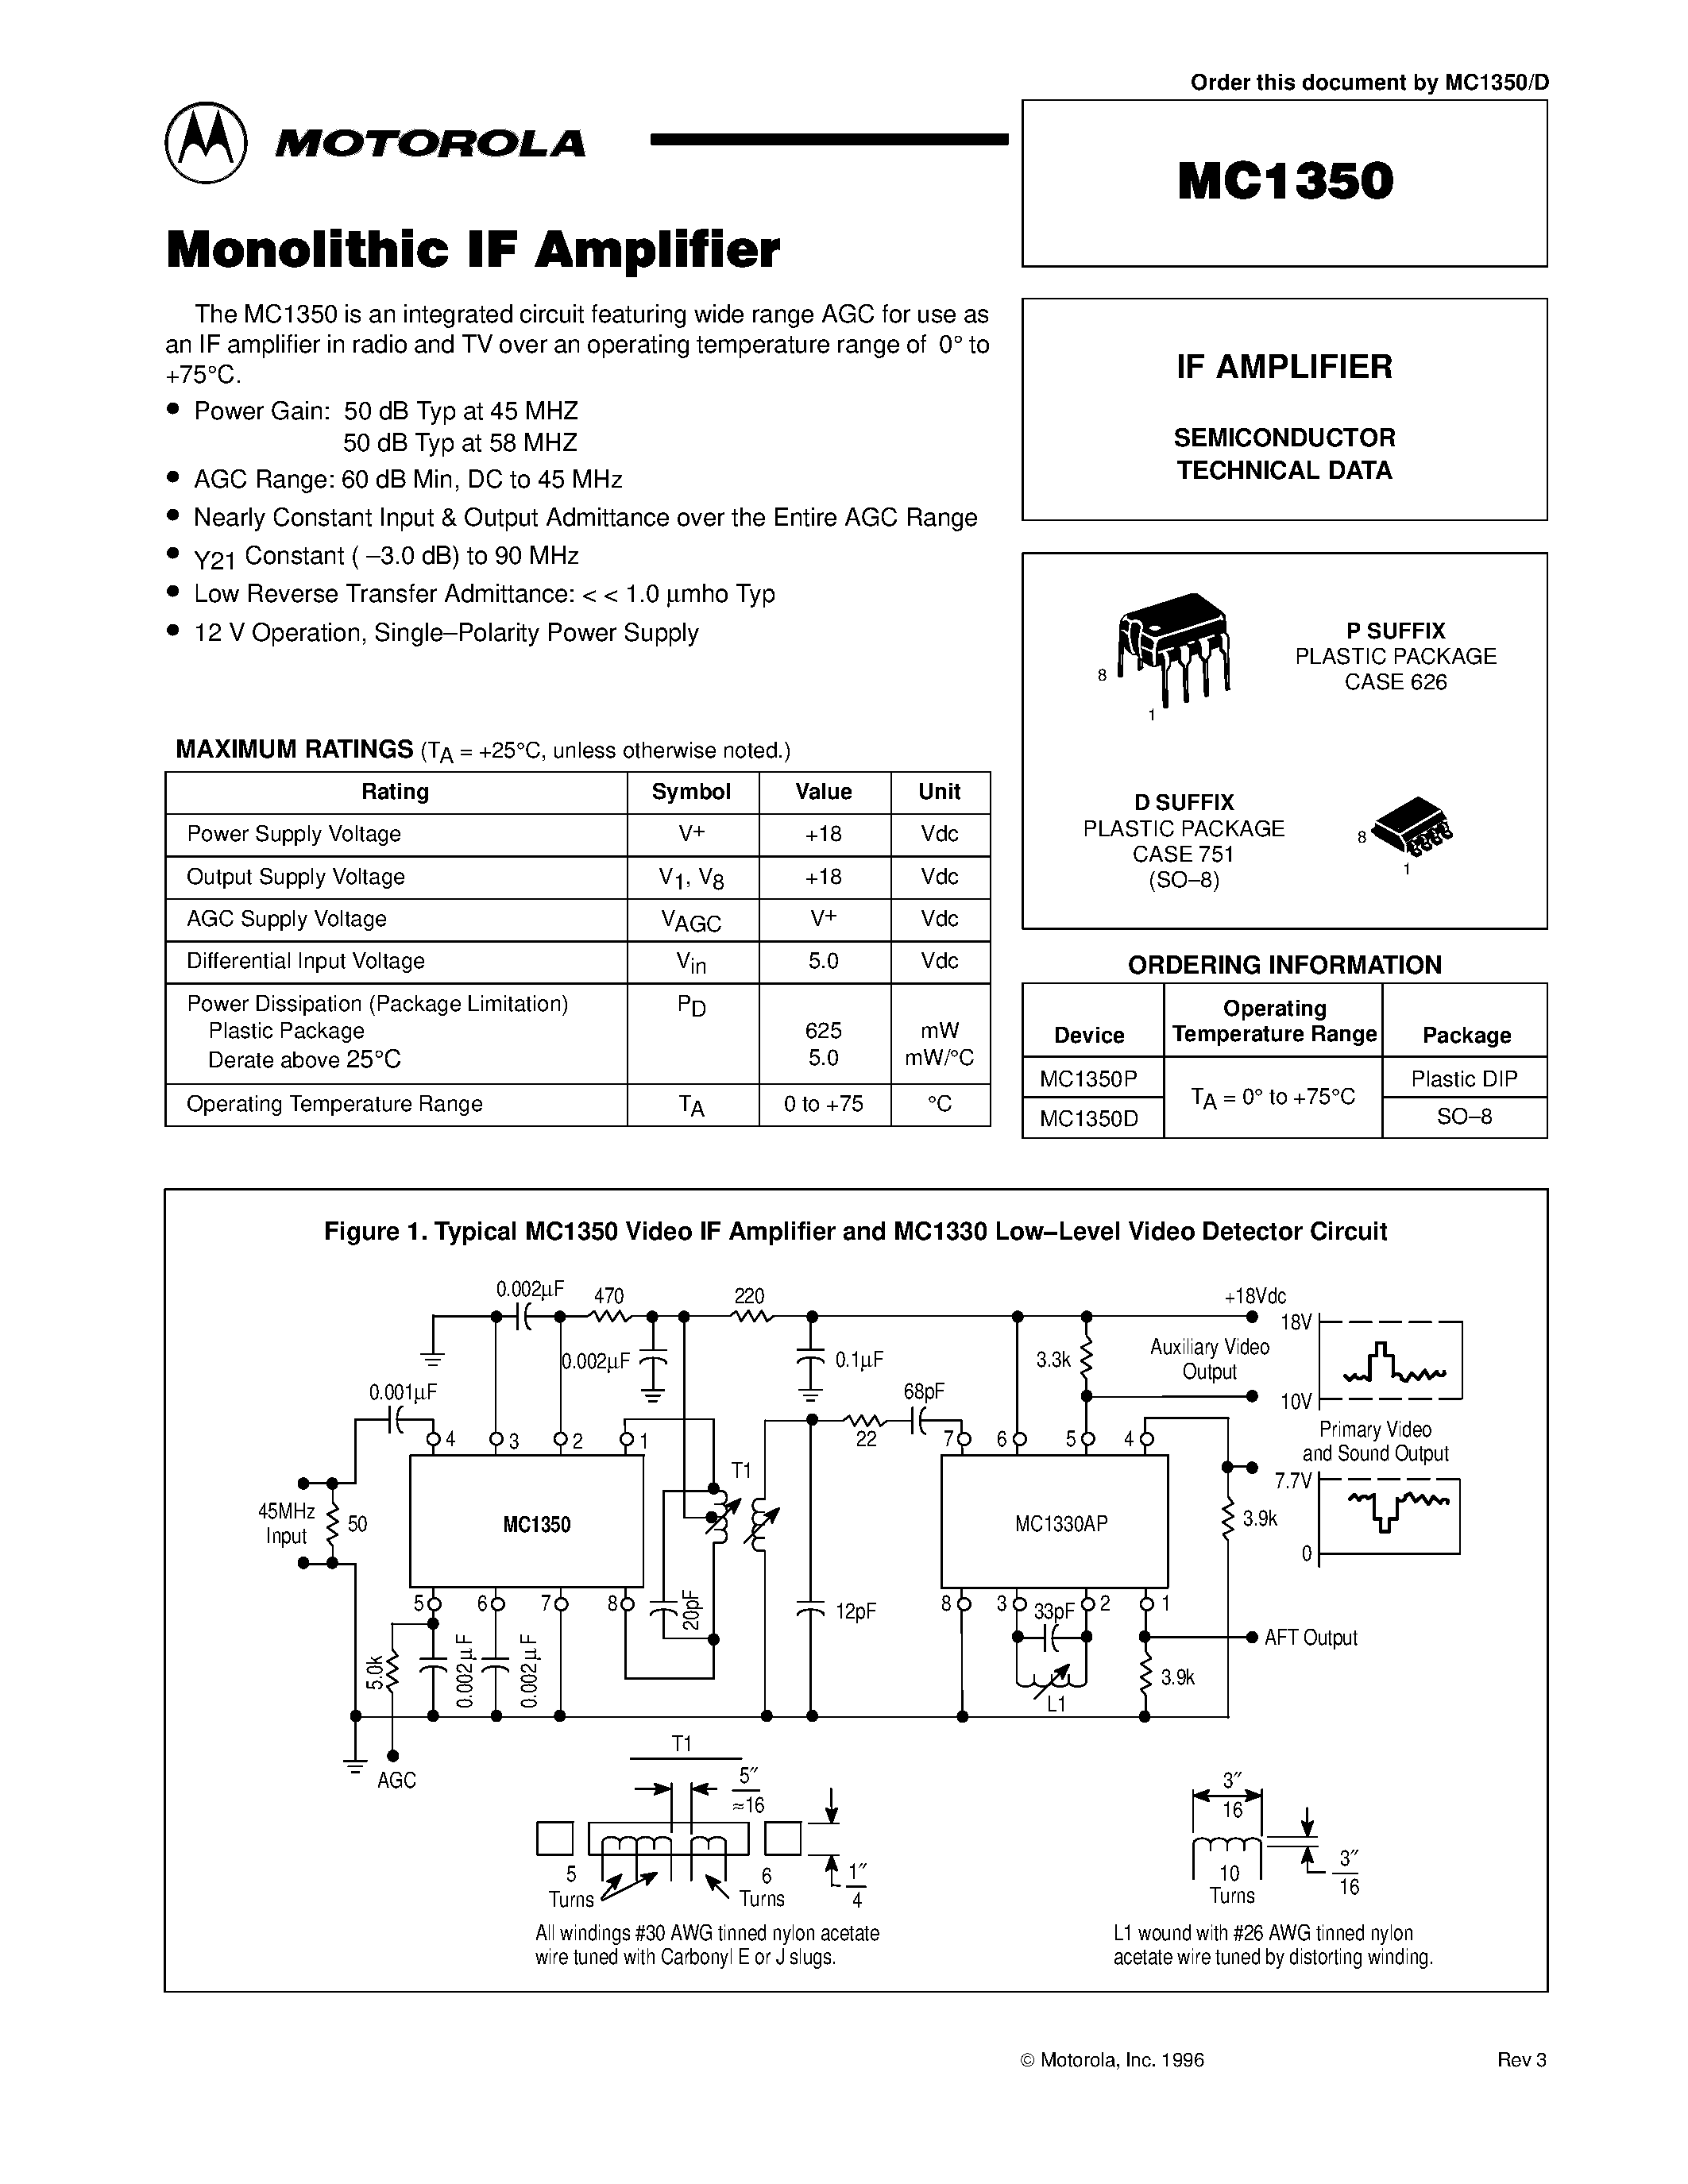 Datasheet MC1350D - IF AMPLIFIER page 1